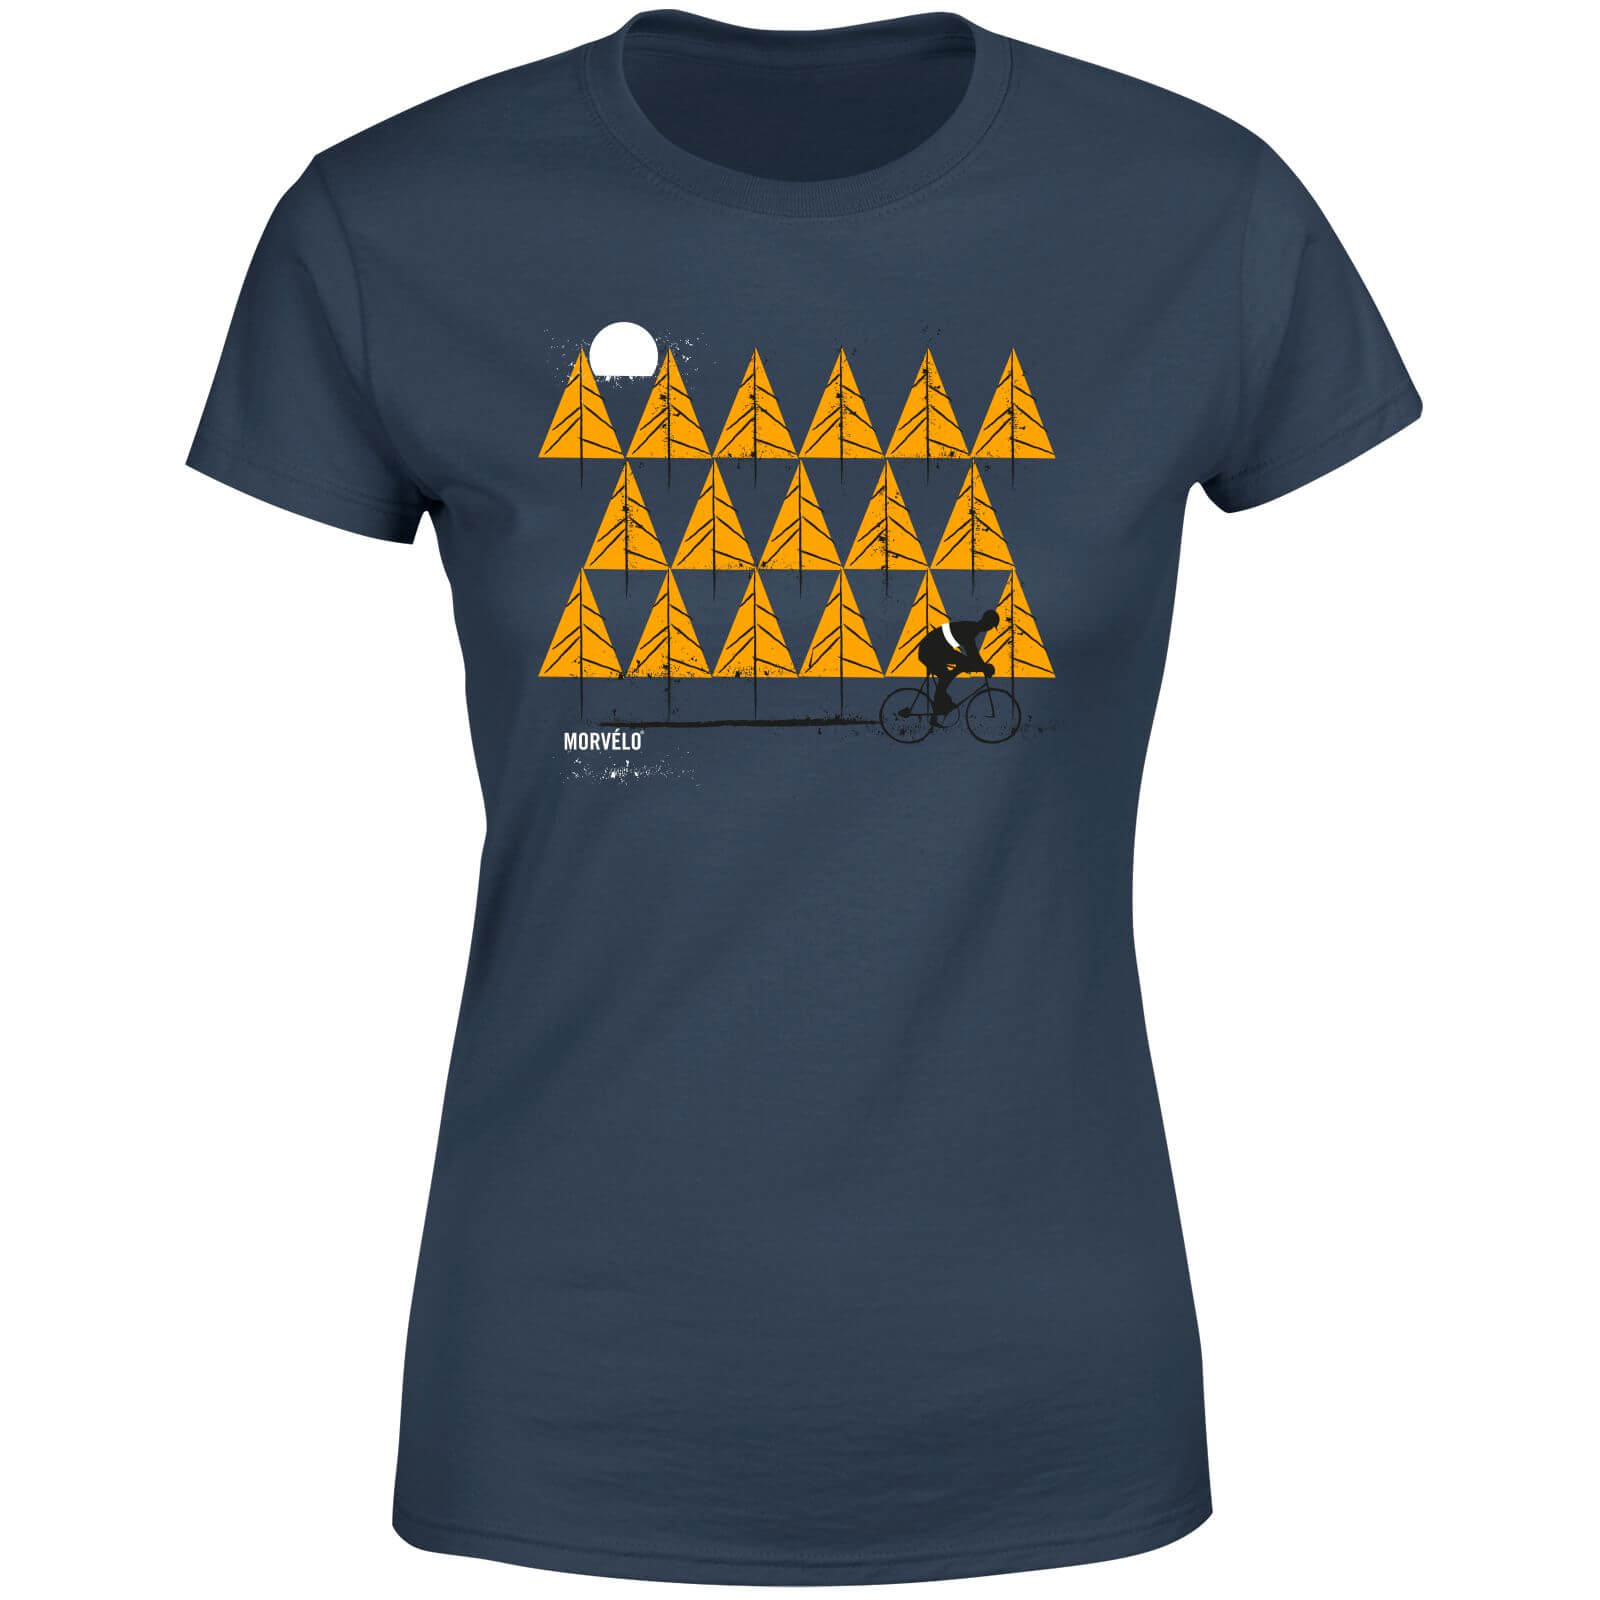 Morvelo Homeward Women's T-Shirt - Navy - XL - Navy